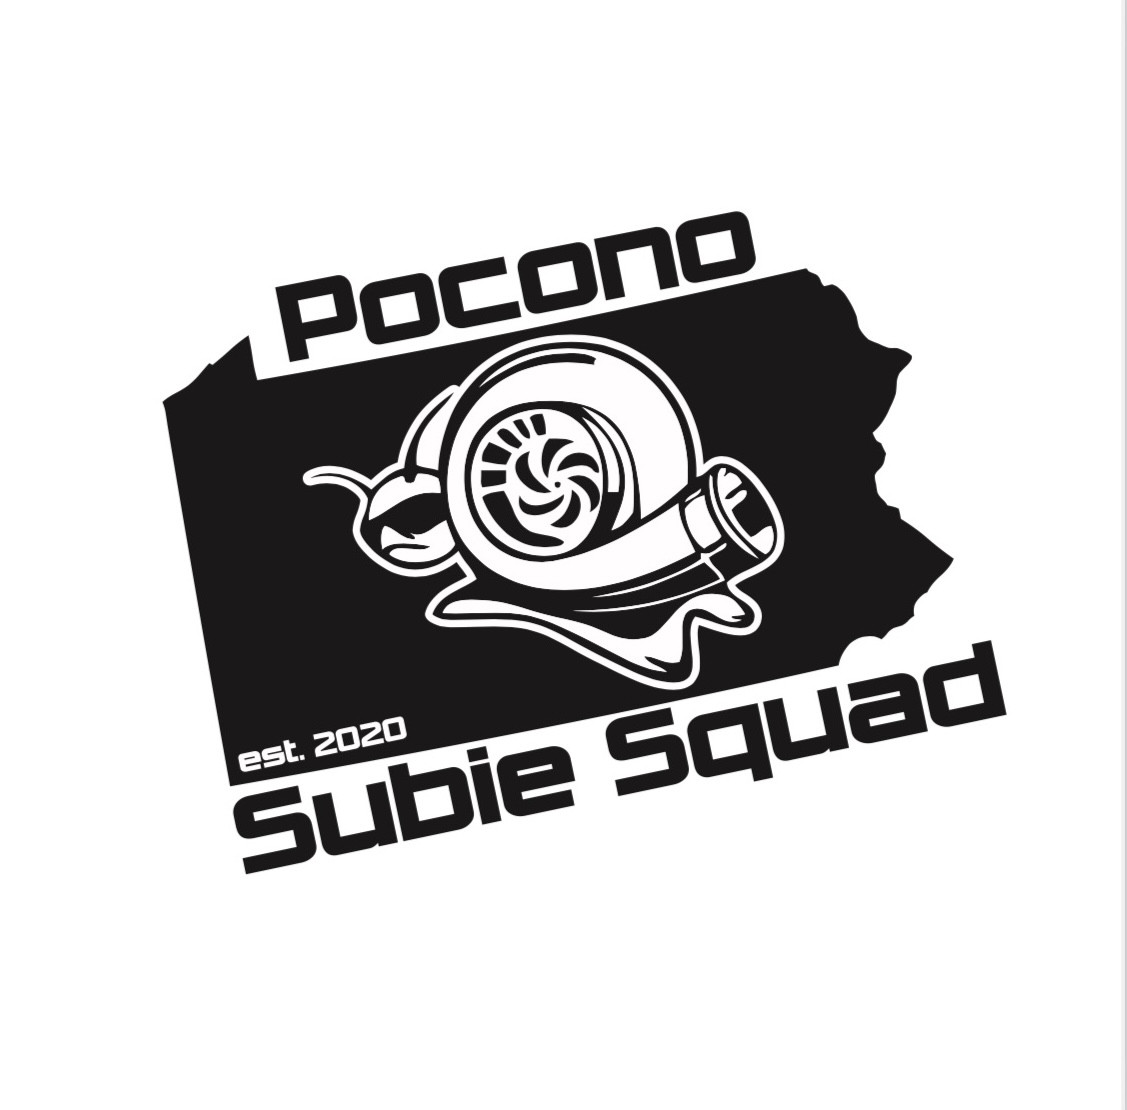 Pocono Subie Squad 